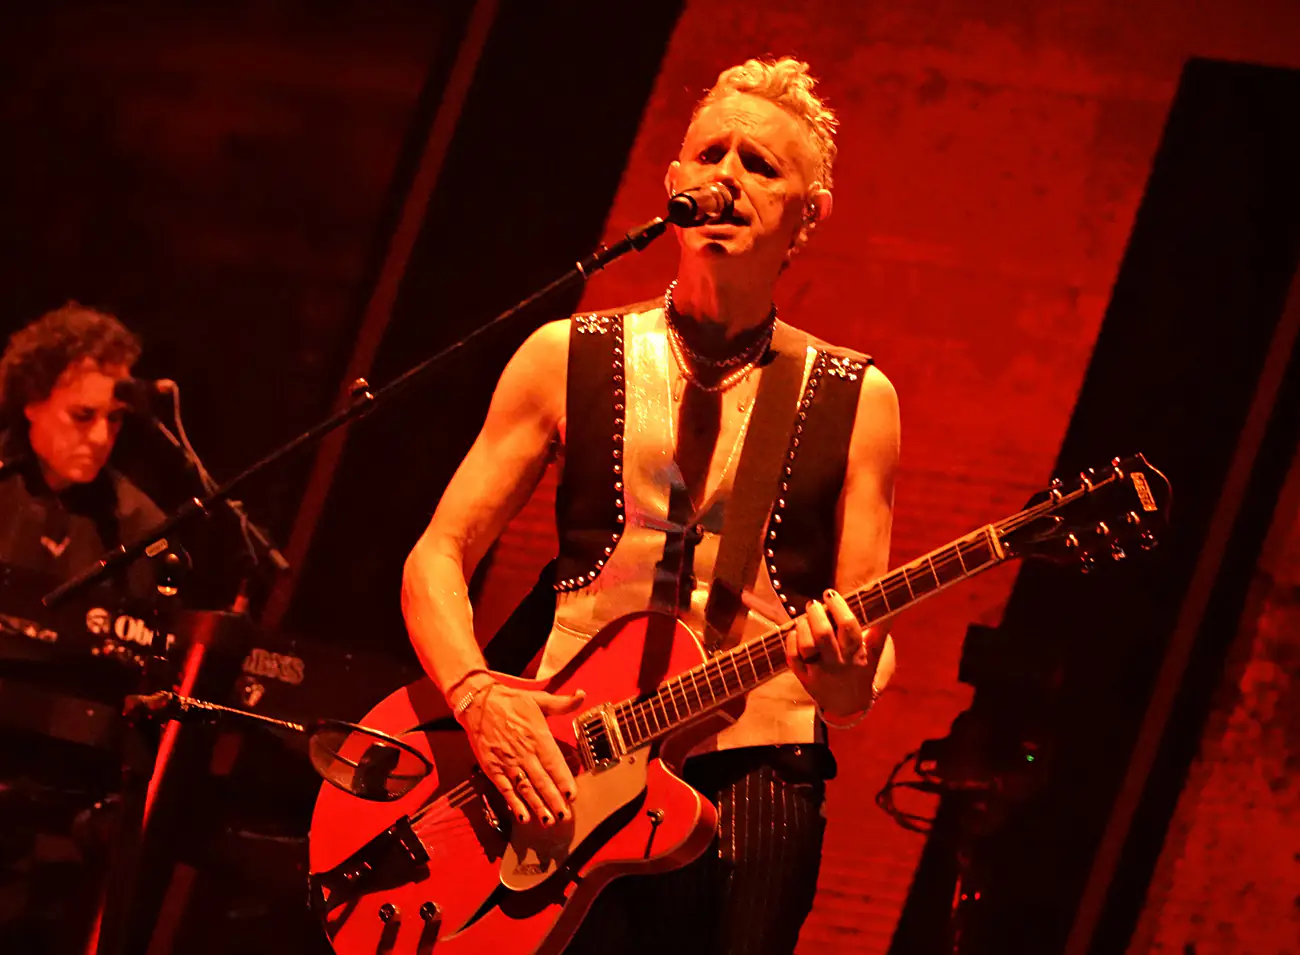 IN FOCUS// Depeche Mode @ Utilita Arena, Birmingham Credit: Alina Salihbekova